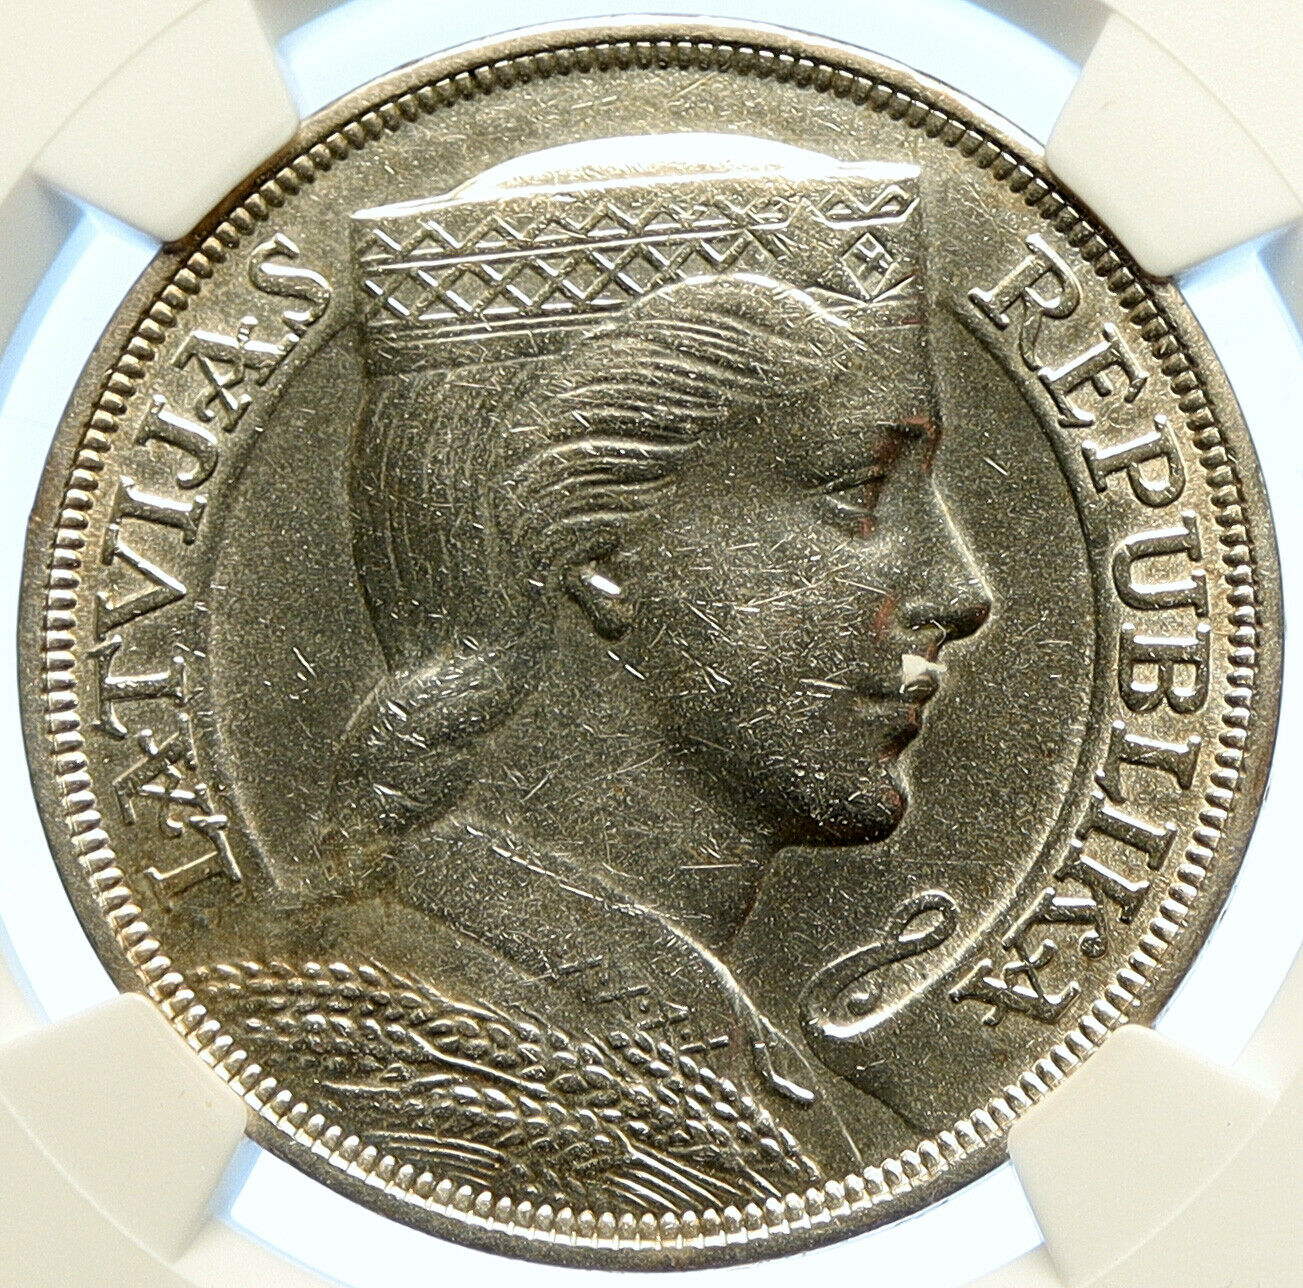 1931 LATVIA Female Headwear Vintage OLD Silver European 5 Lati Coin NGC i106580